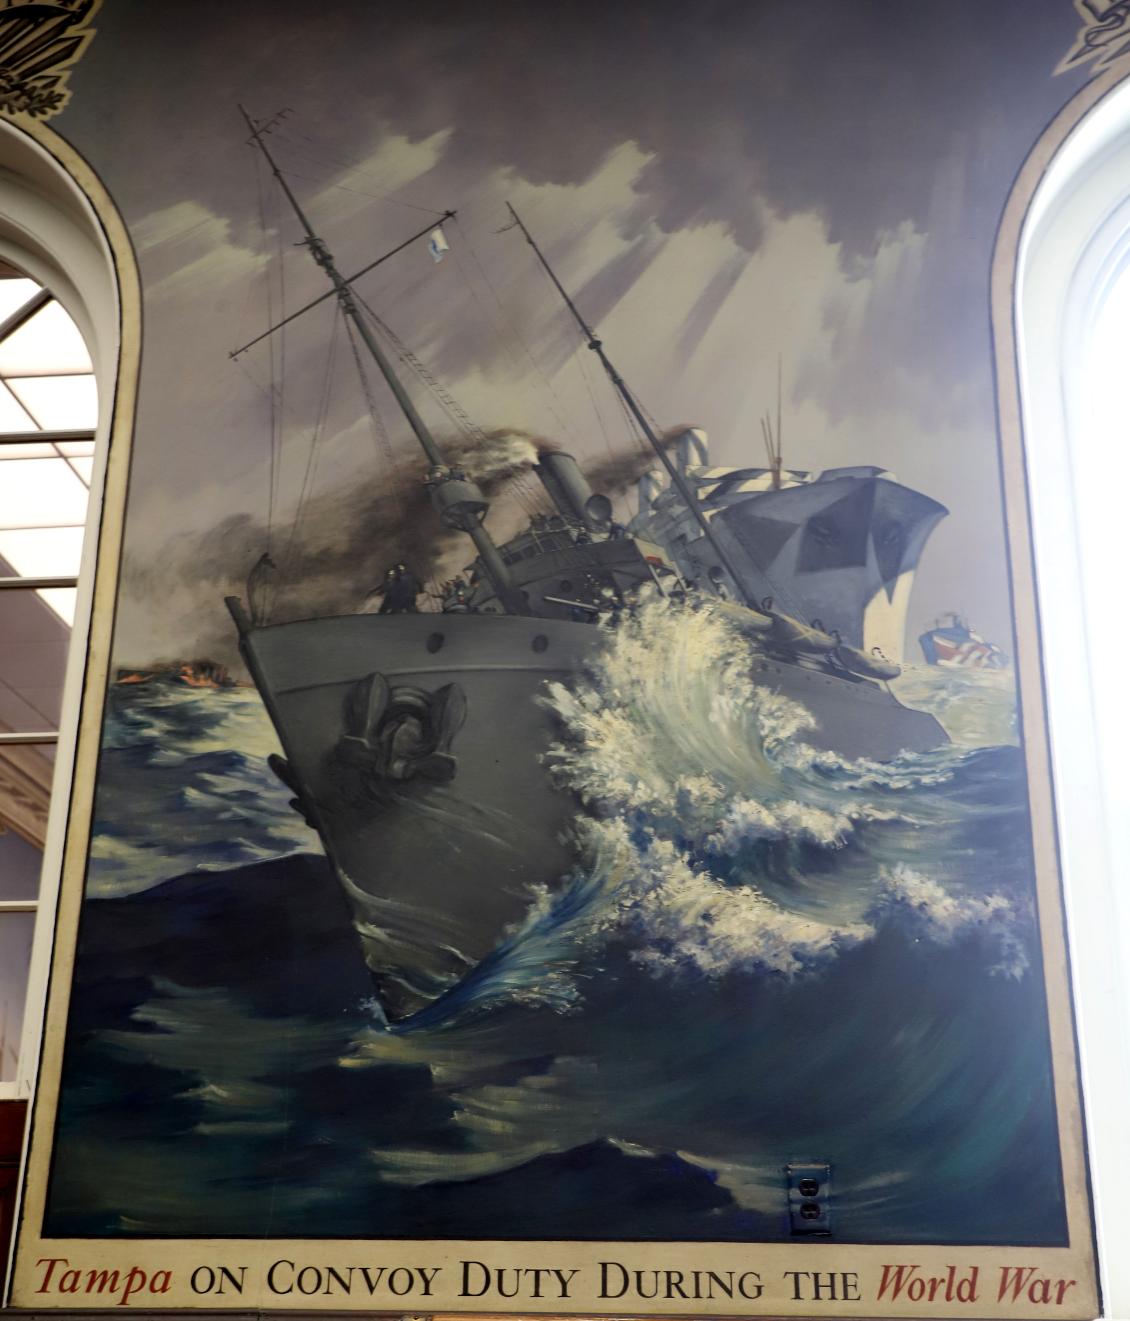 U.S. Coast Guard Academy - Hamilton Hall Mural - Tampa with Convoy during World War I